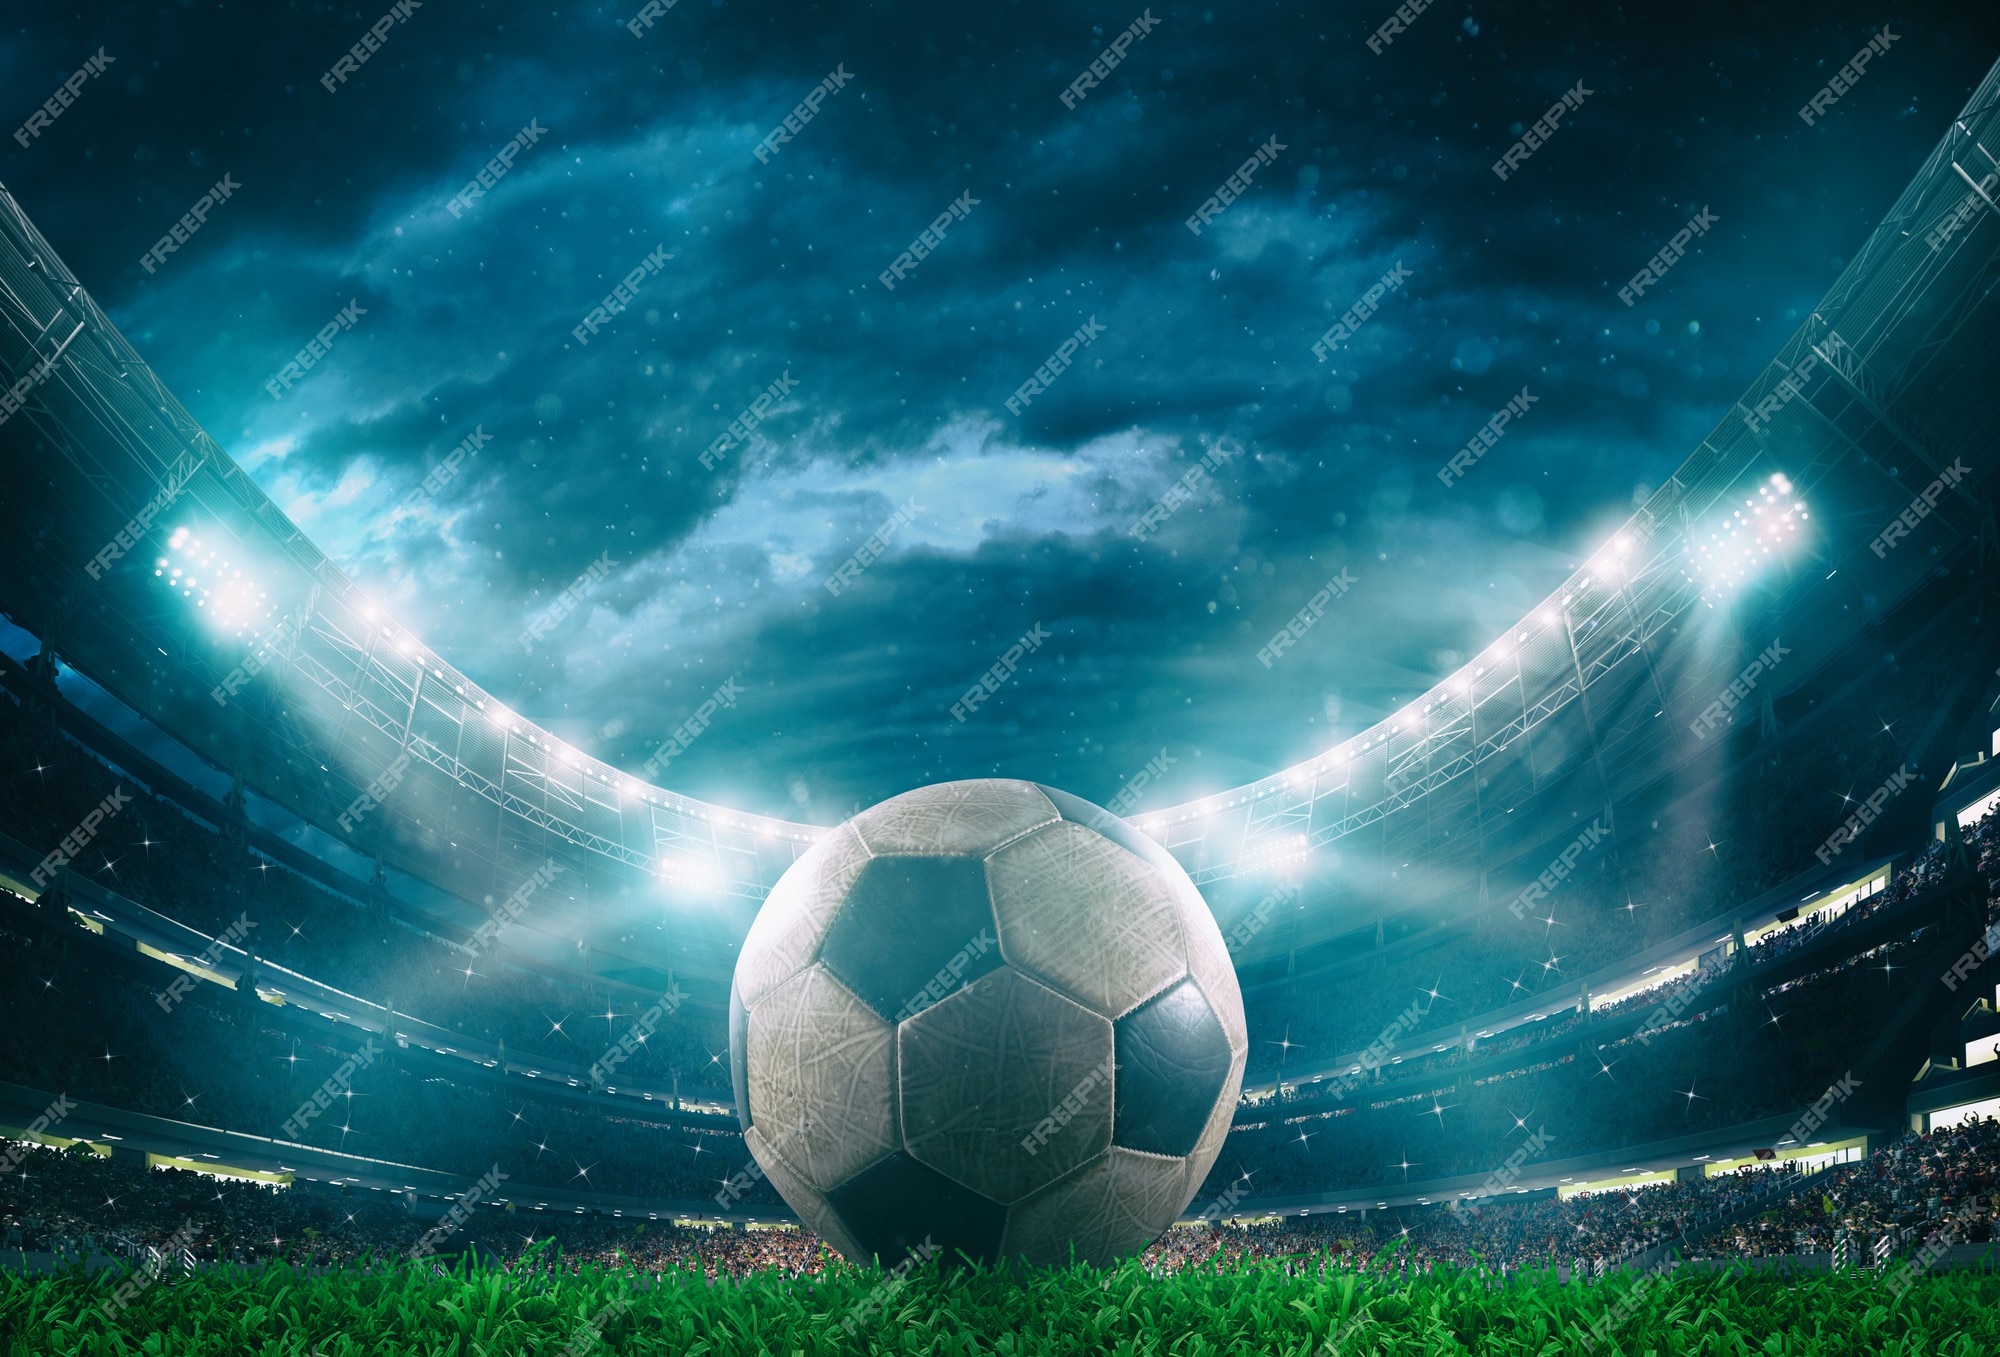 Soccer Wallpaper Images - Free Download on Freepik